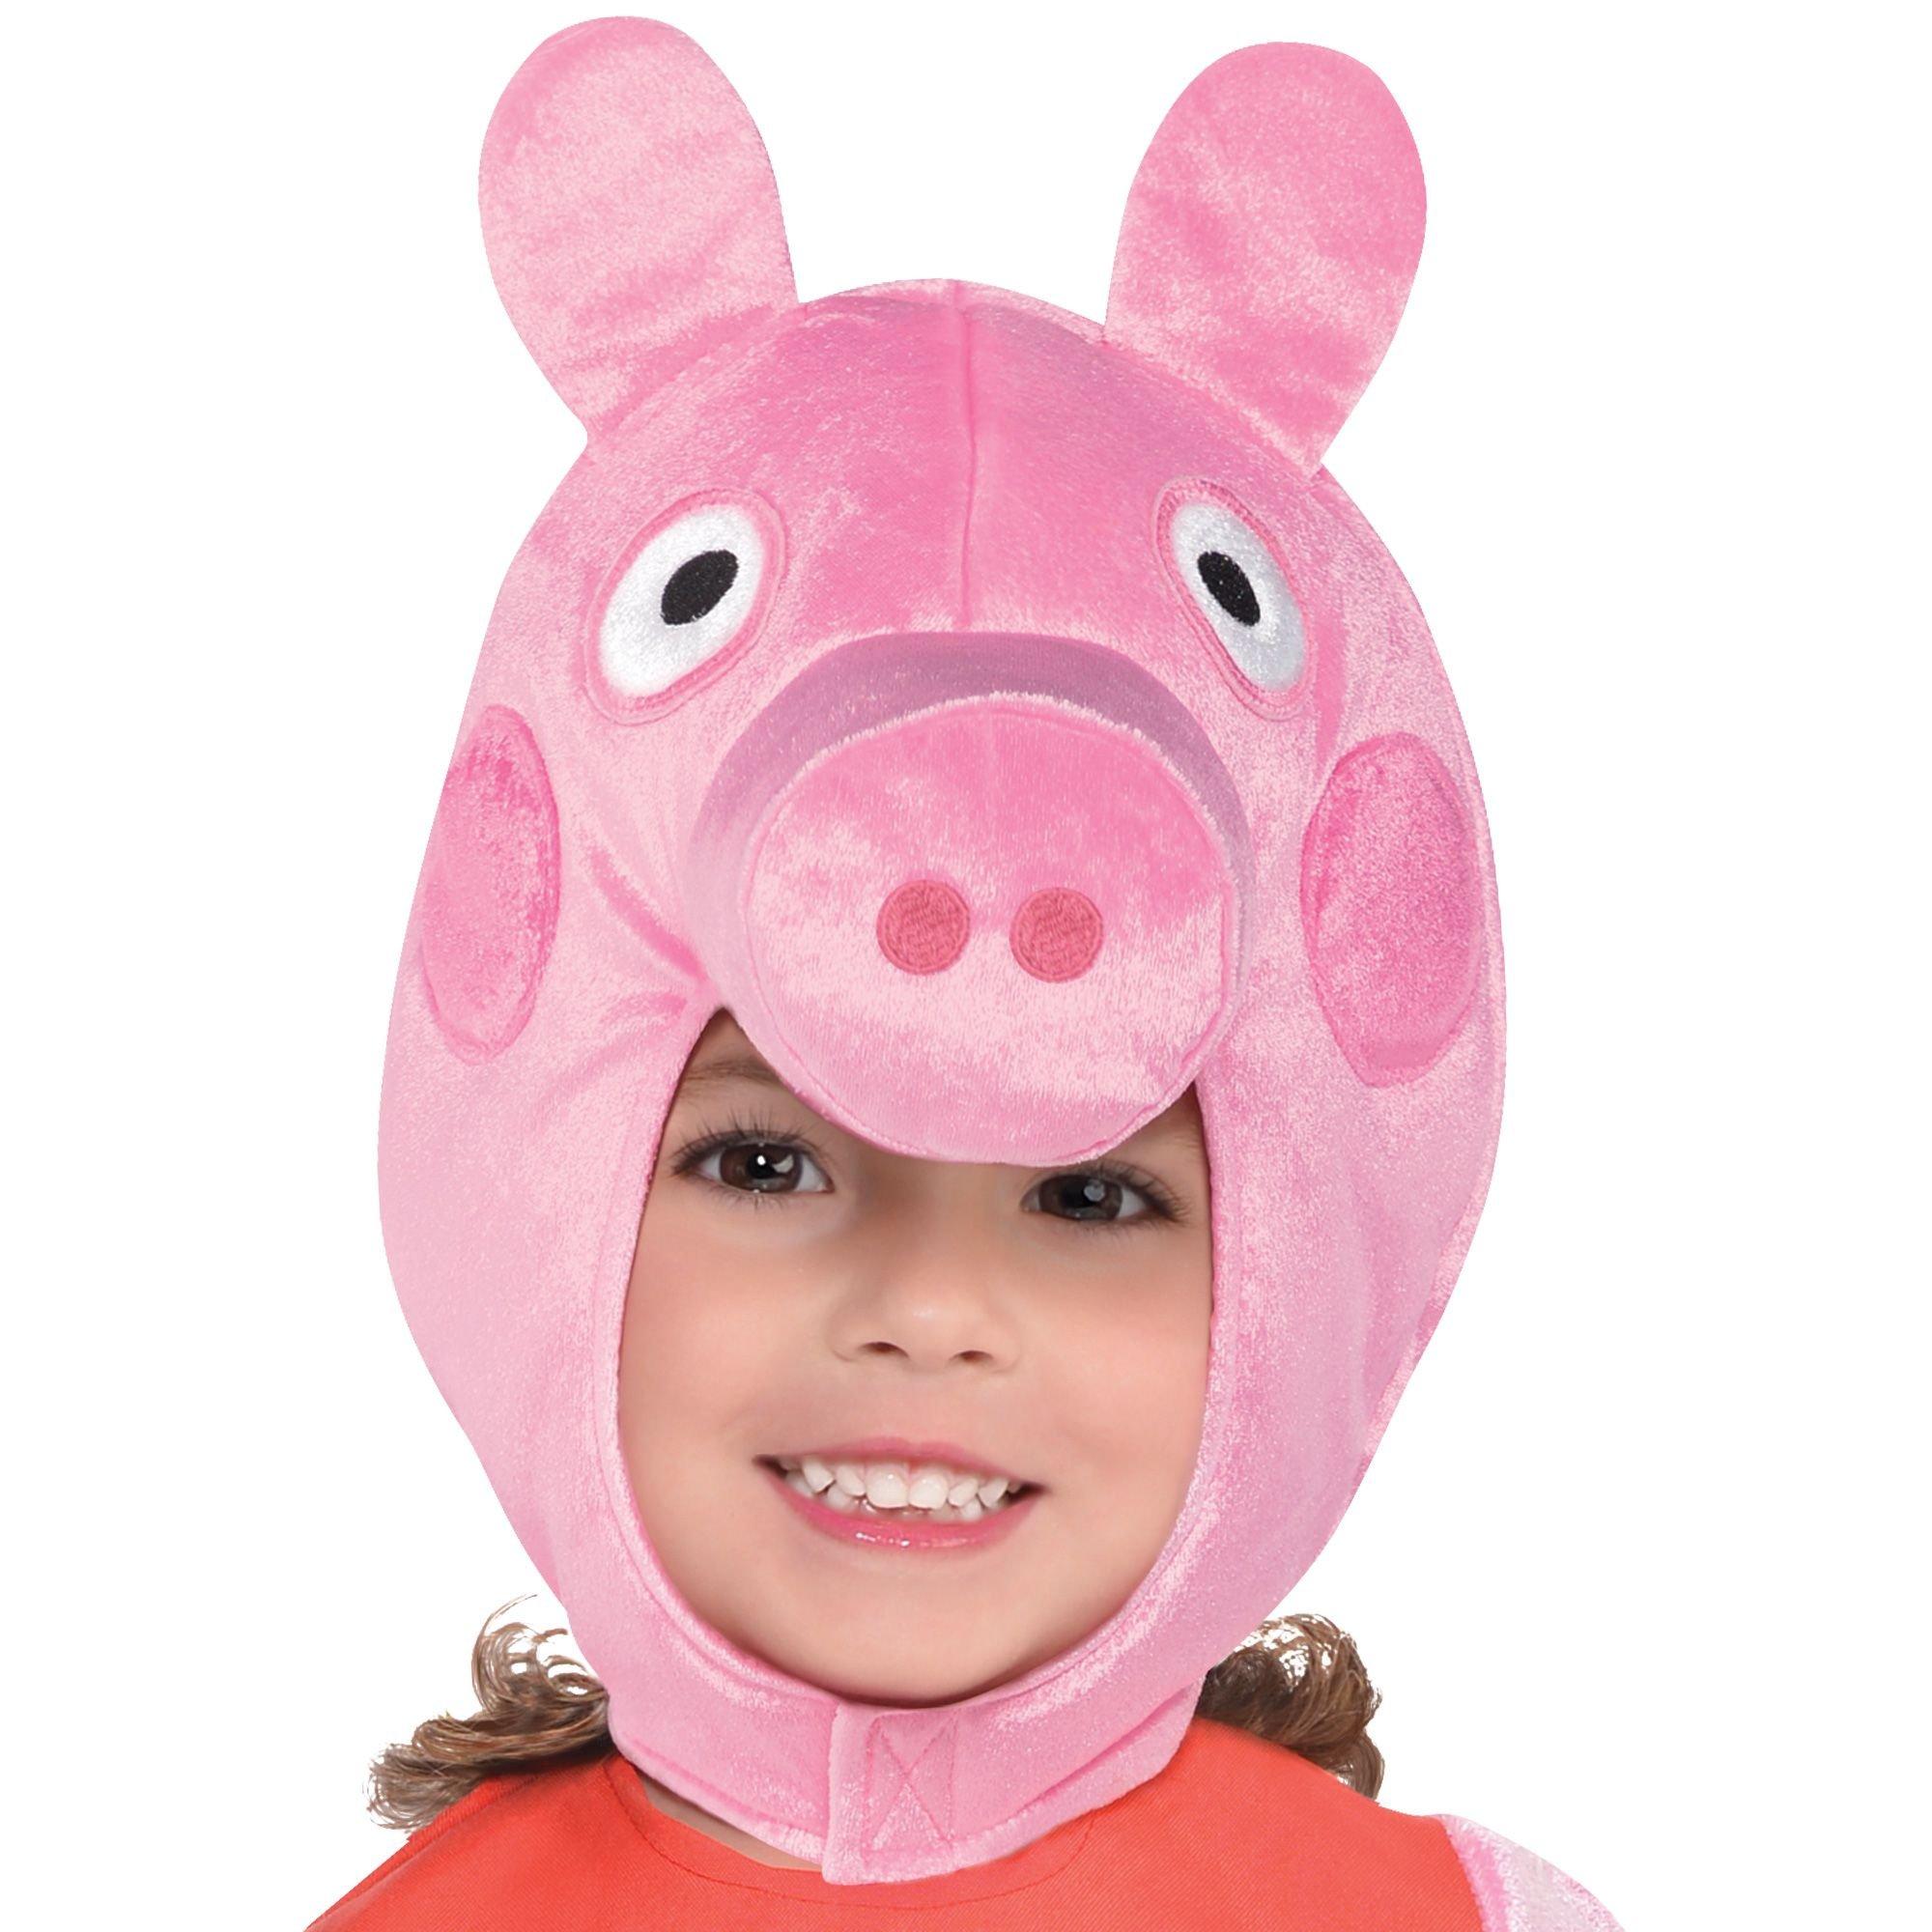 Peppa Pig Costume for Kids